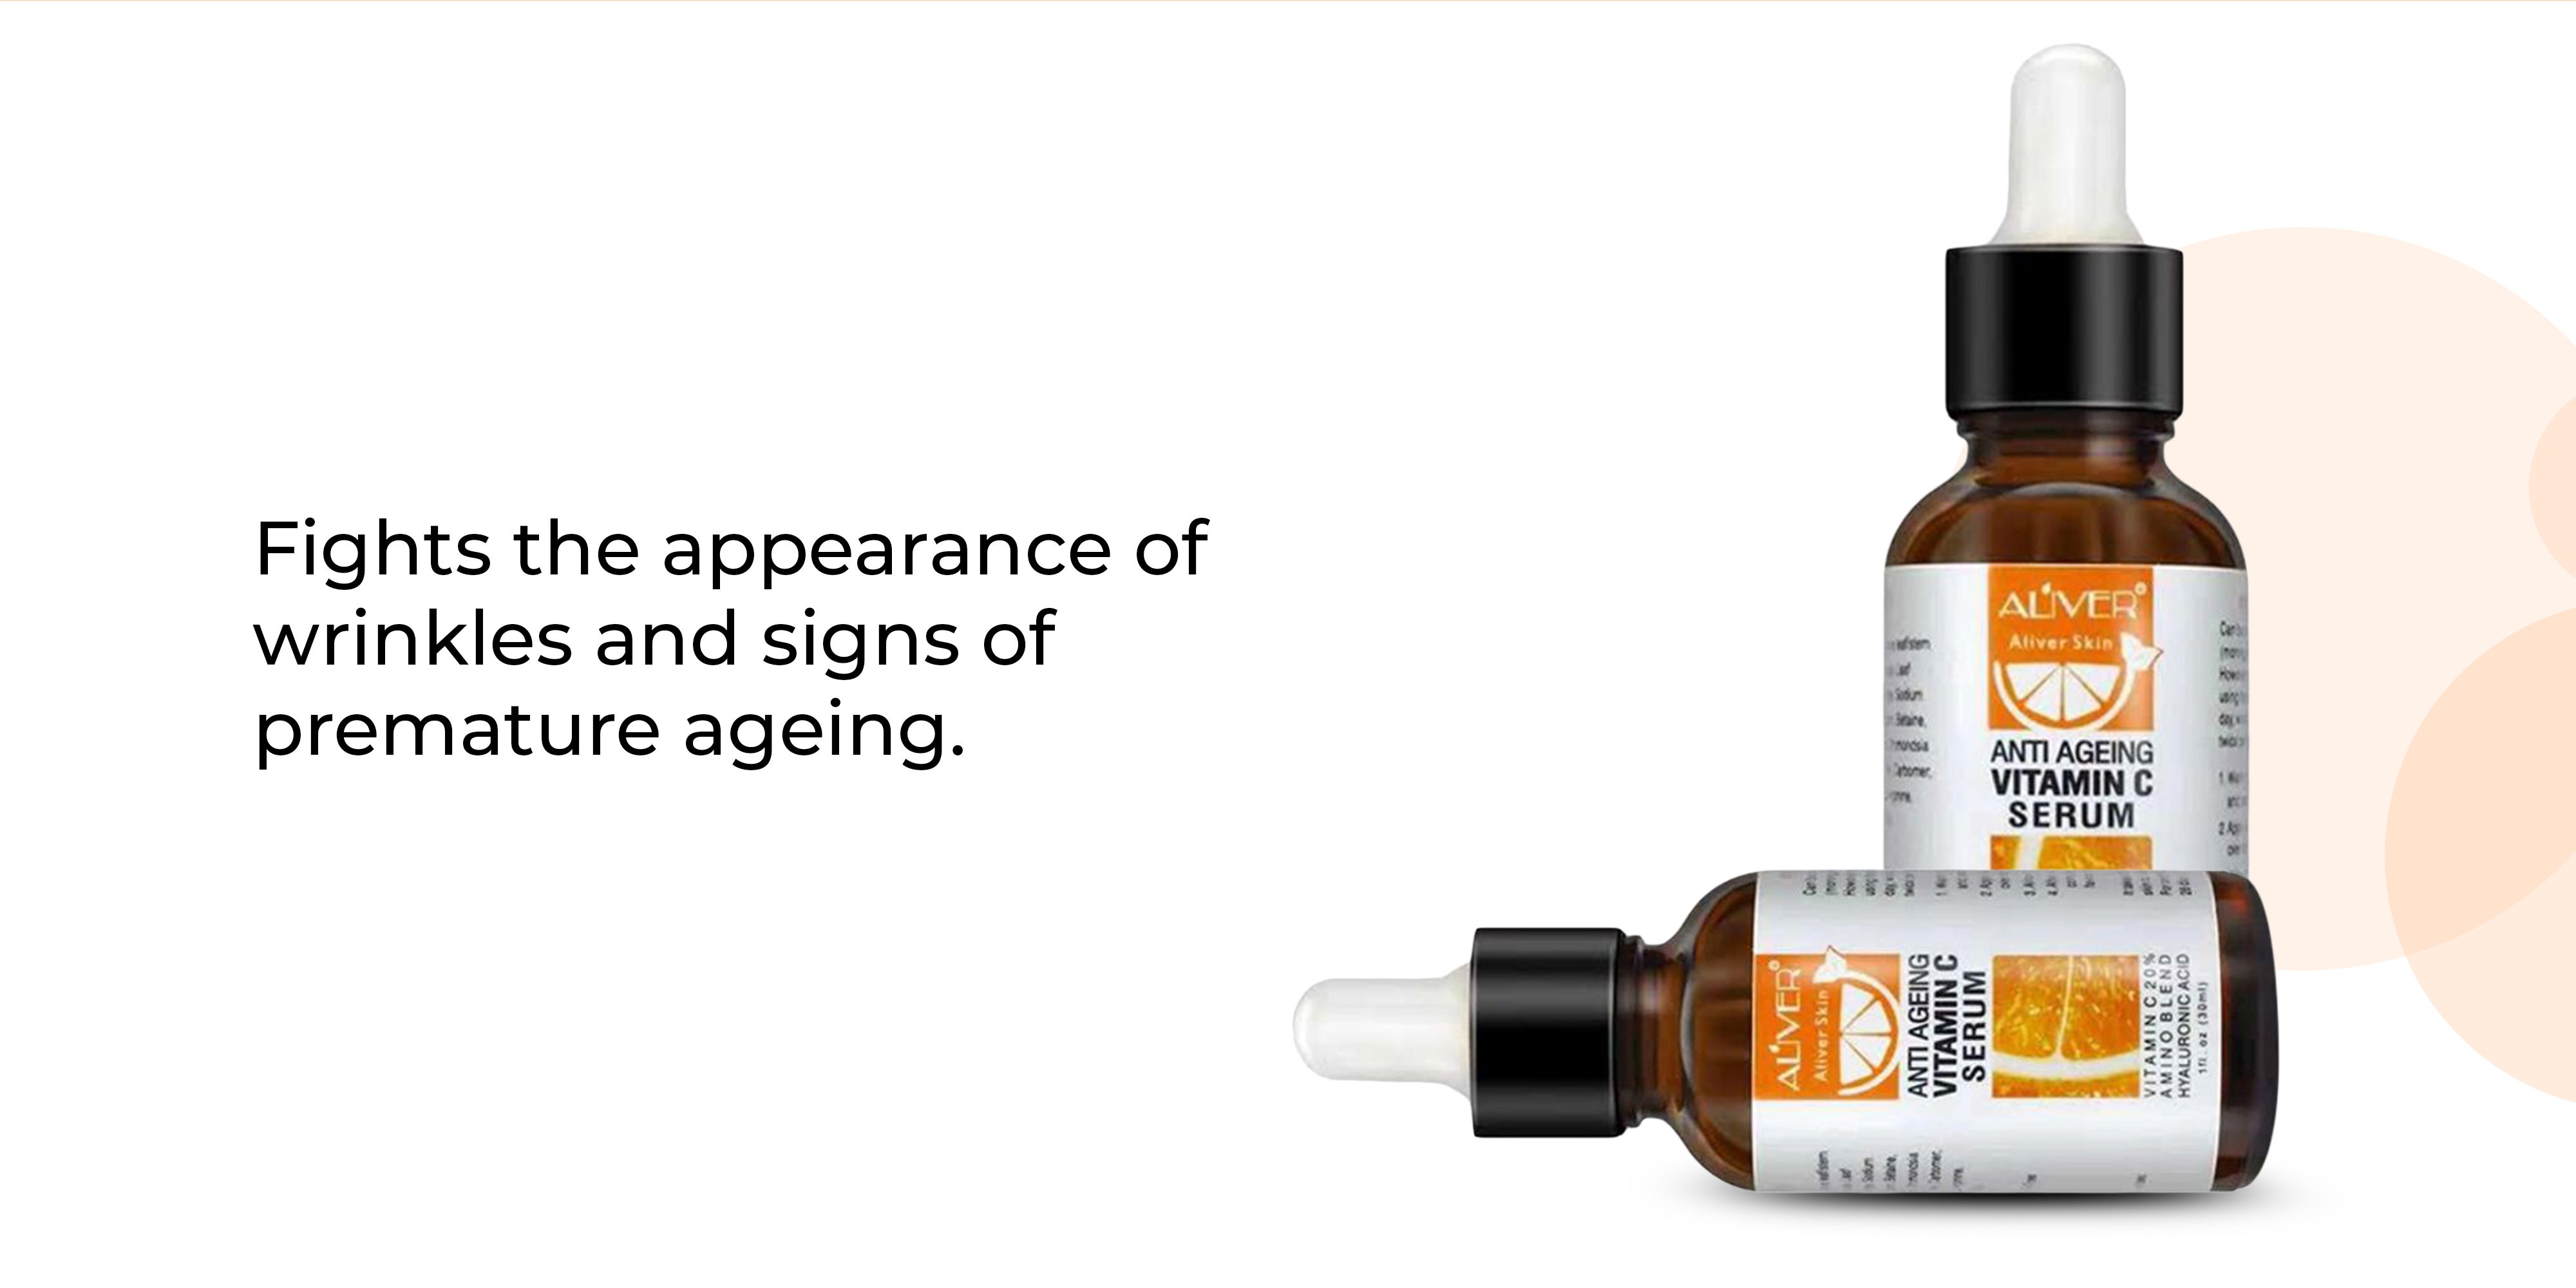 aliver anti ageing vitamin c serum reviews